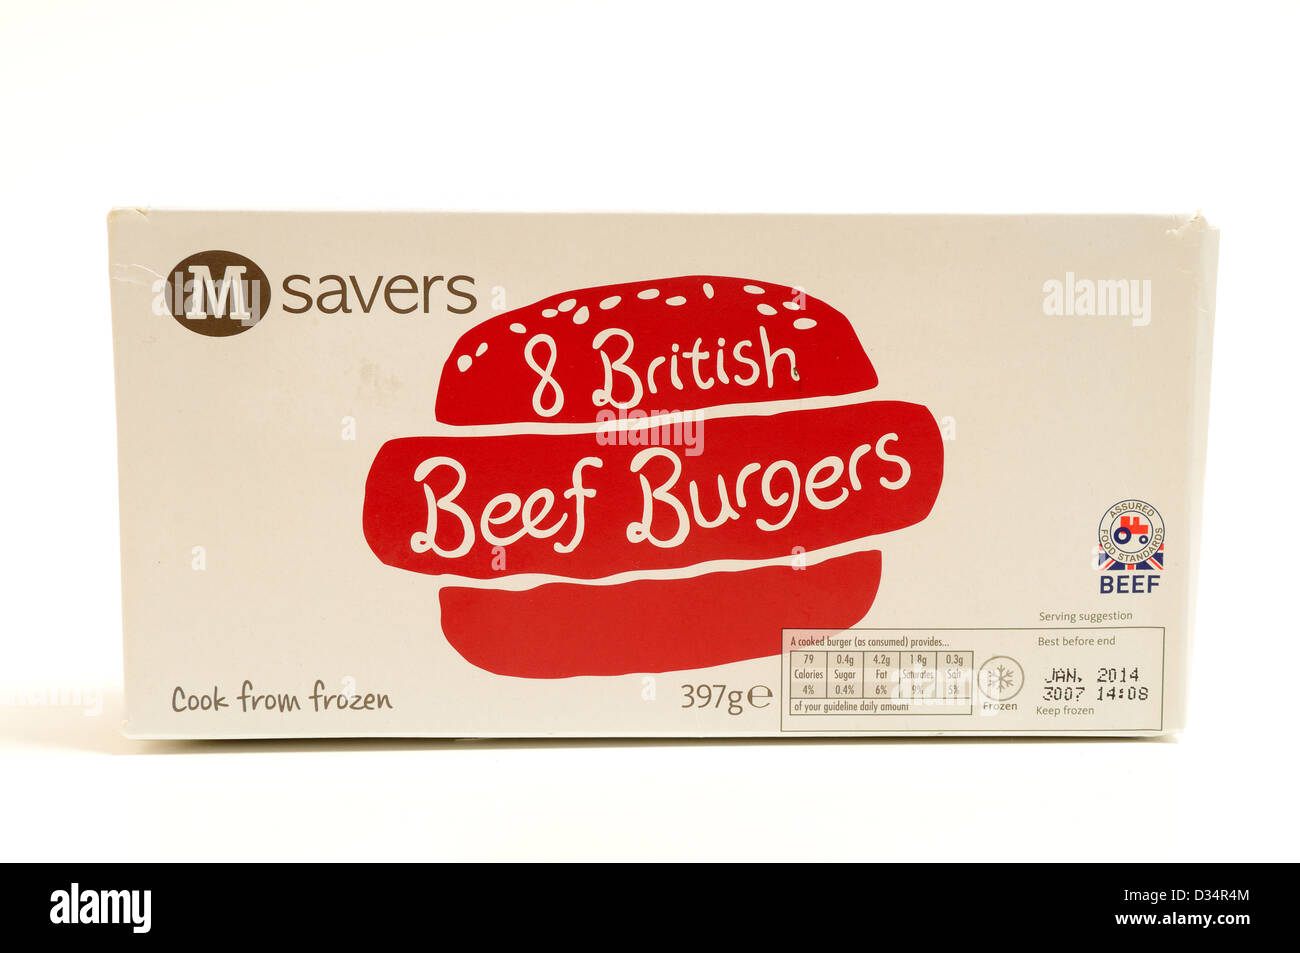 Morrisons Saver 8  British Burgers. Stock Photo